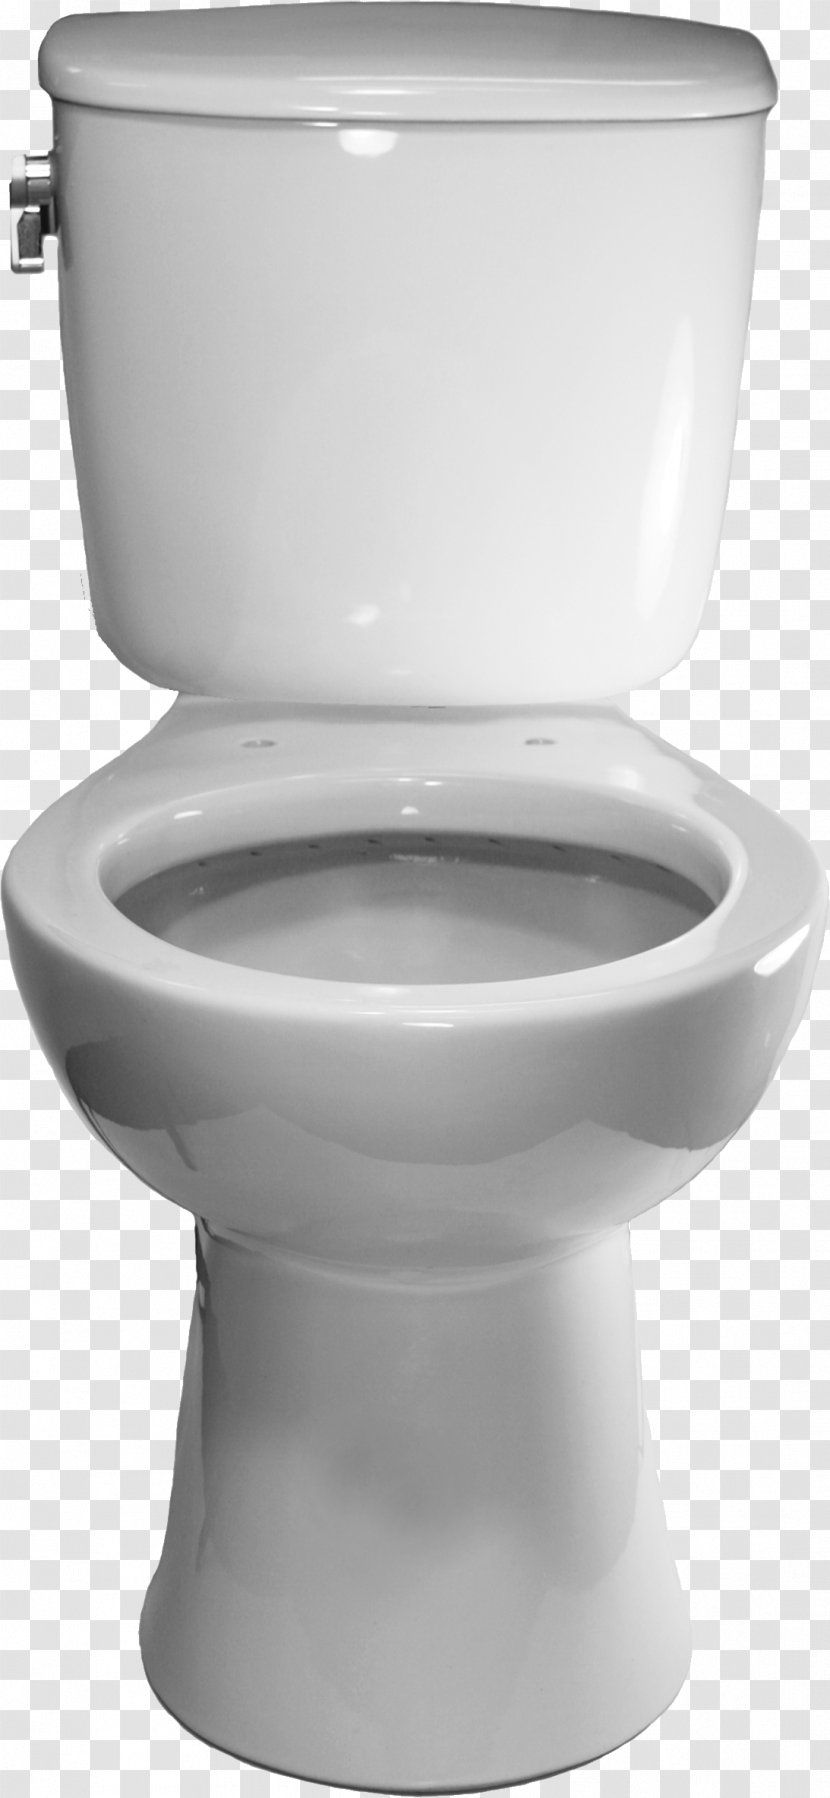 Dual Flush Toilet Sloan Valve Company Flushometer - American Standard Brands Transparent PNG